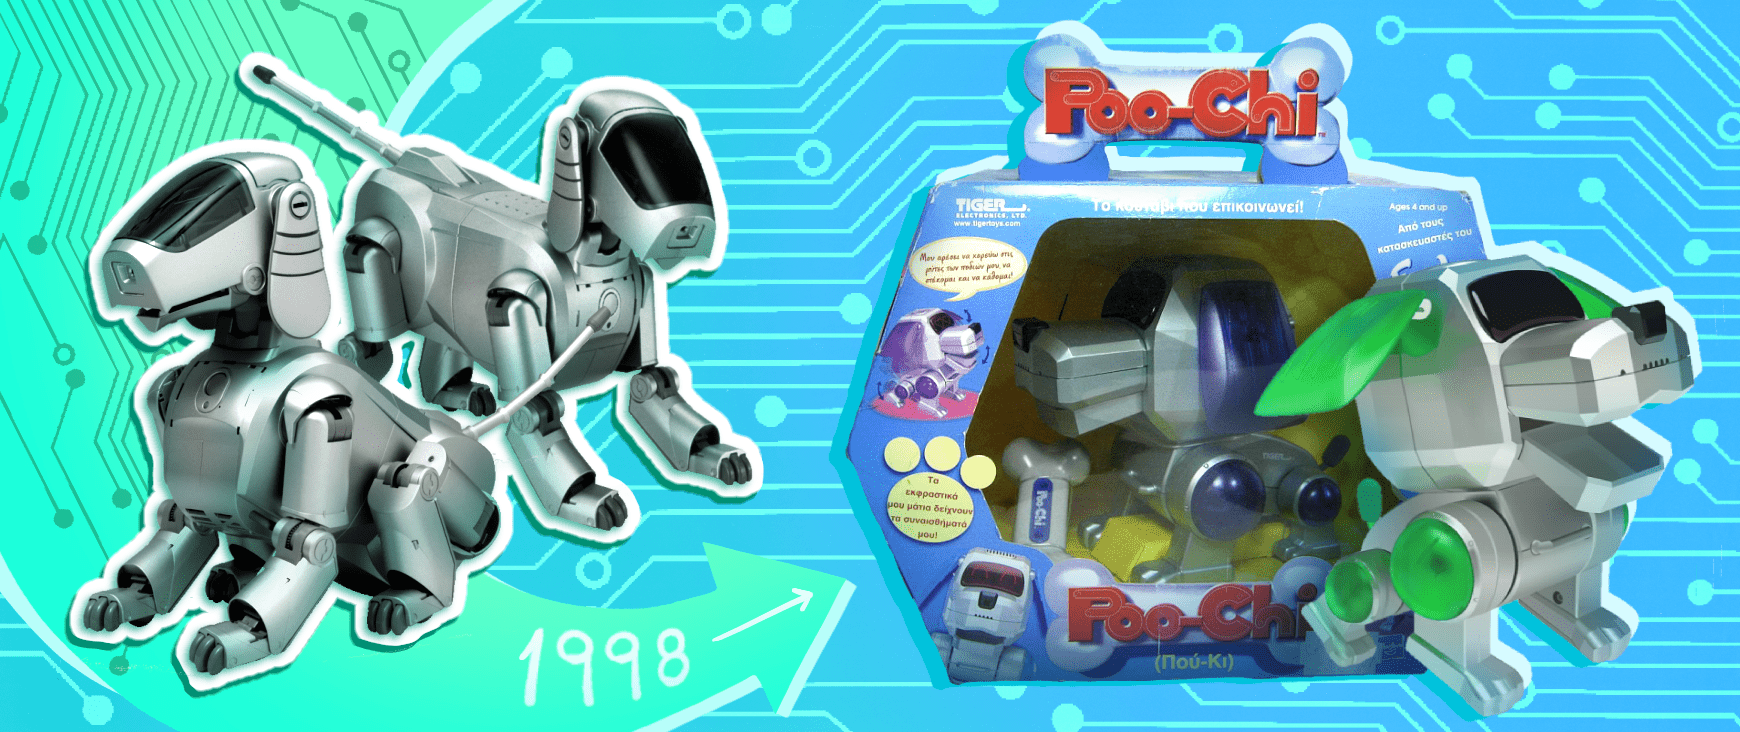 AIBO and Poo-Chi robot dog toys